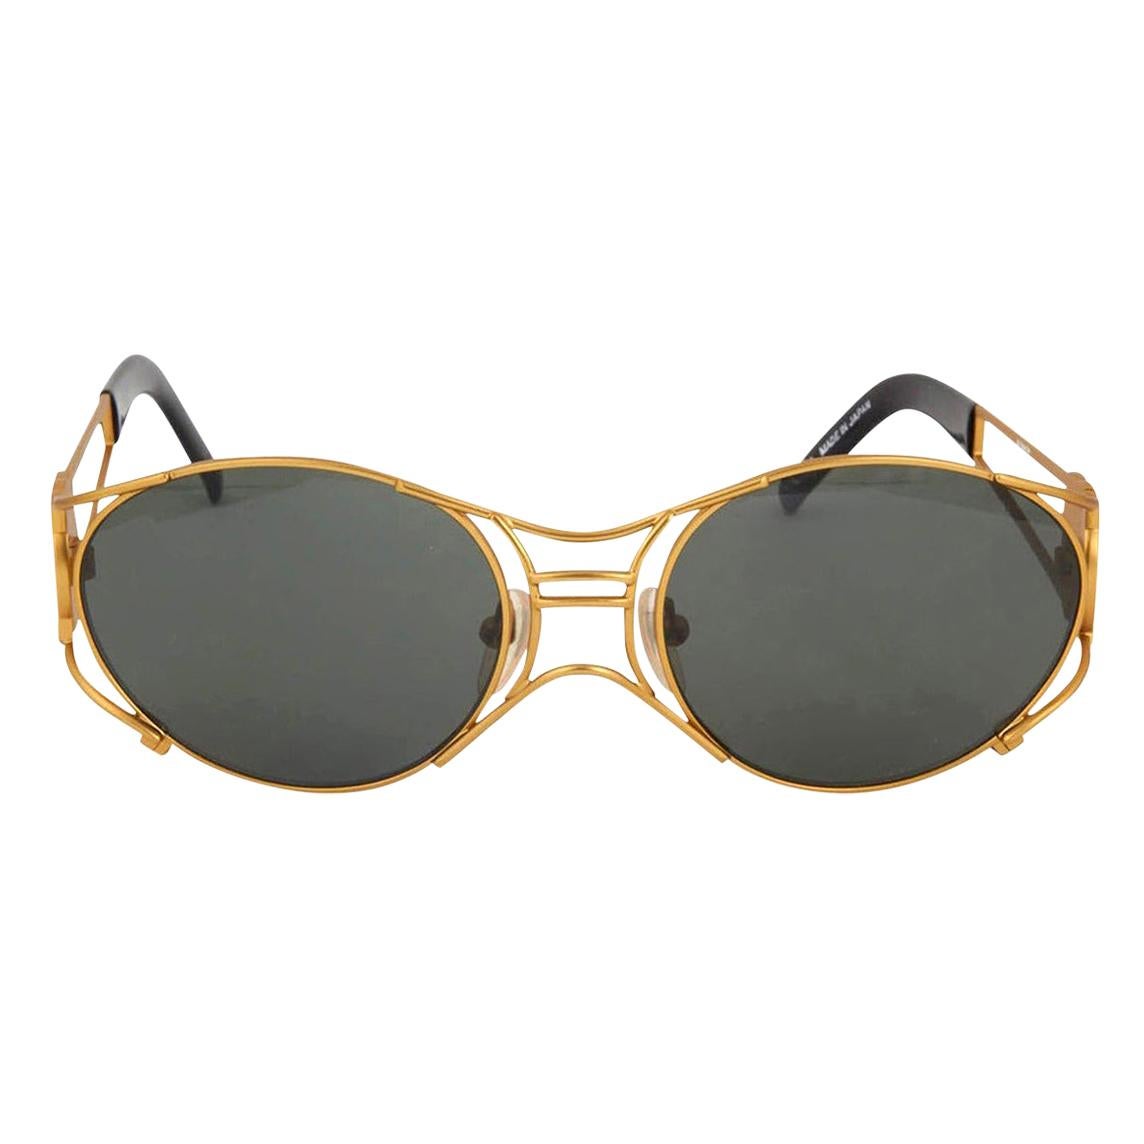 Jean Paul Gaultier Vintage Sunglasses 58-6101 For Sale